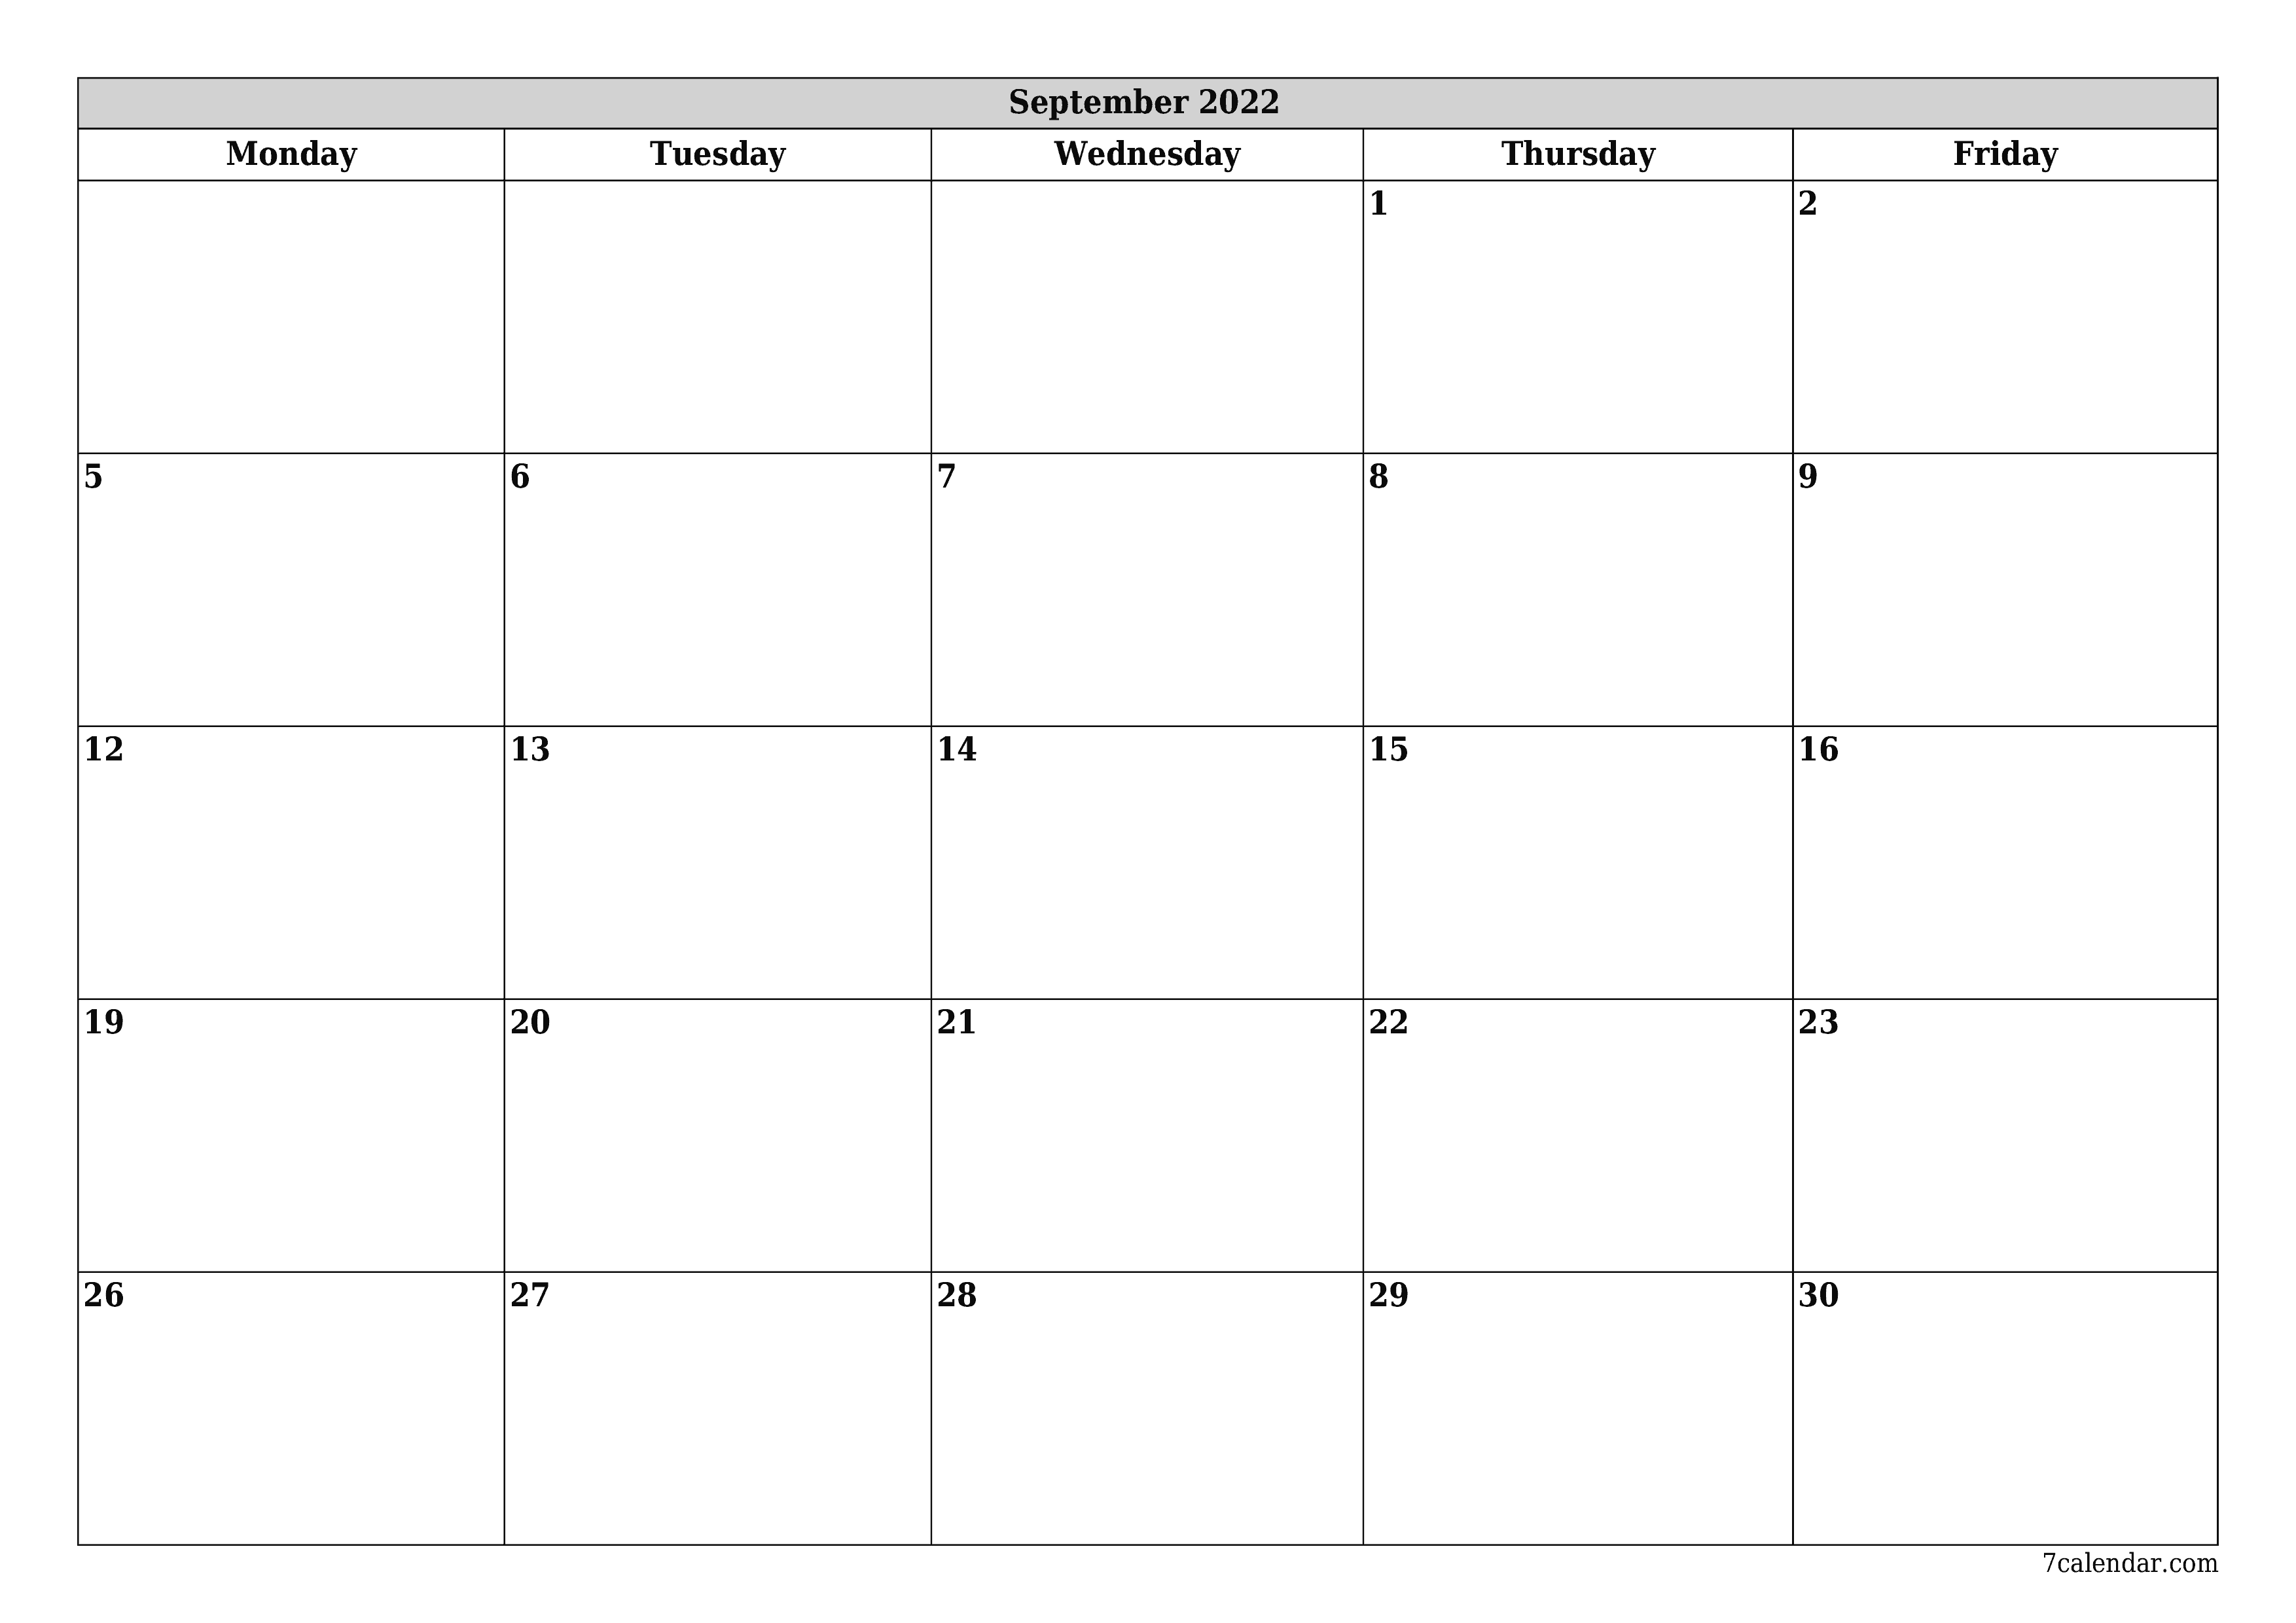 printable wall template free horizontal Monthly planner calendar September (Sep) 2022